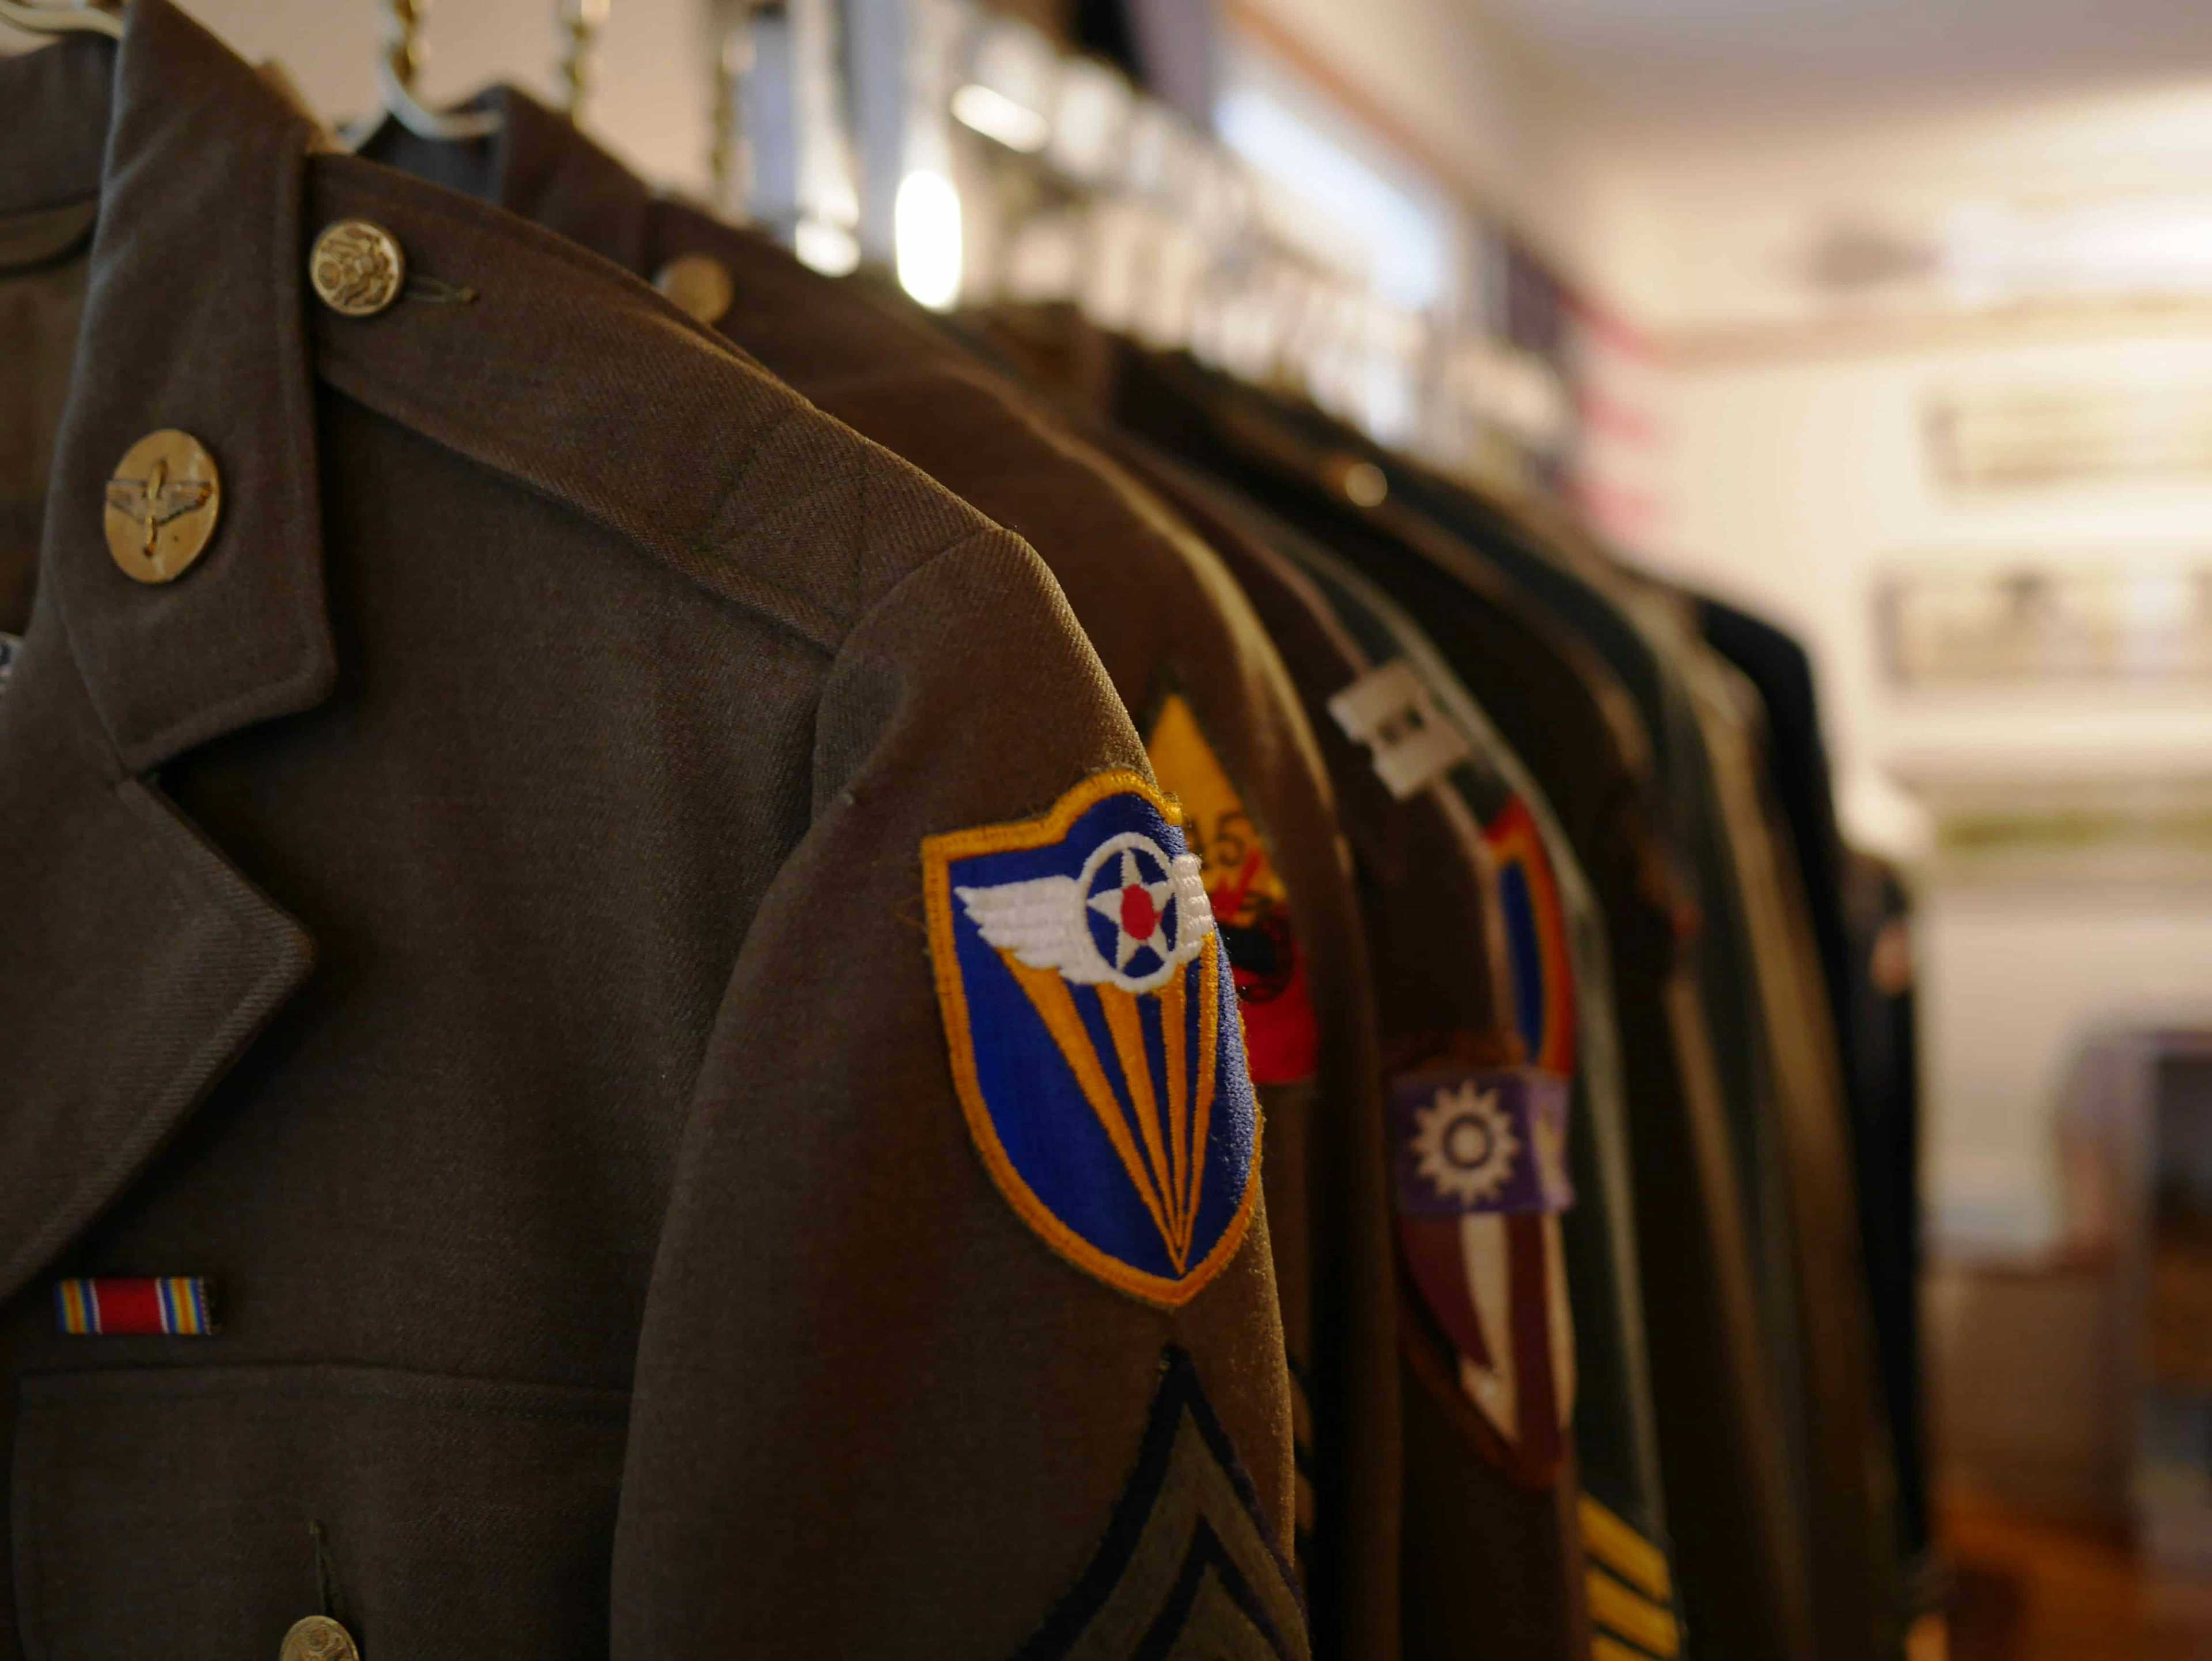 Military uniforms hanging